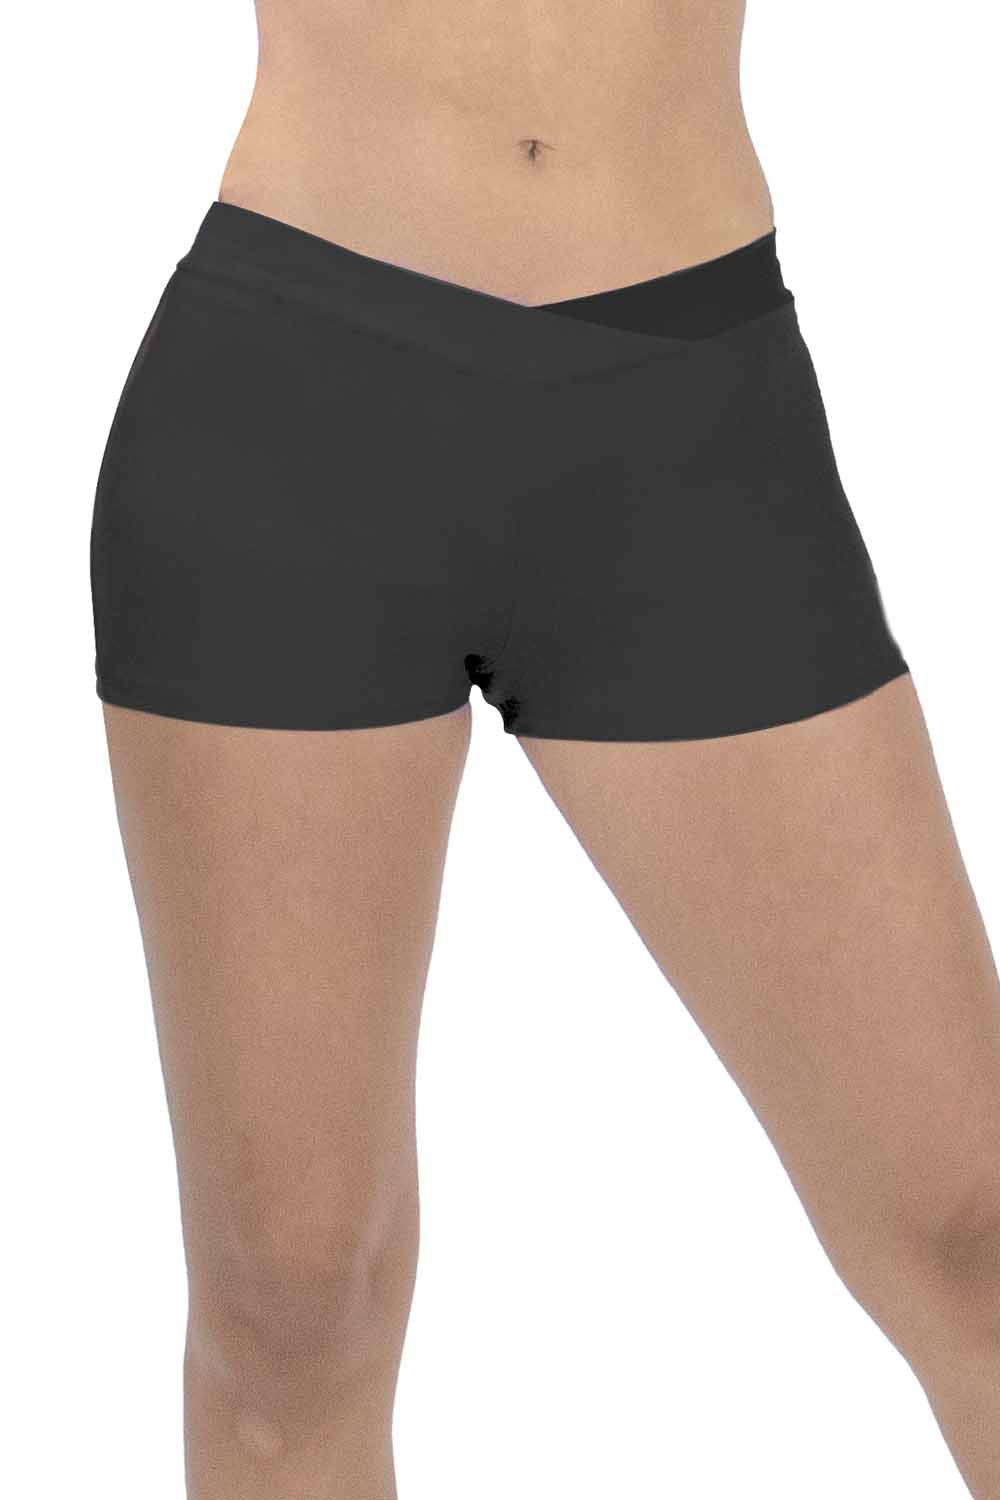 Adult 1 Inseam Microfiber V-front Hot Shorts